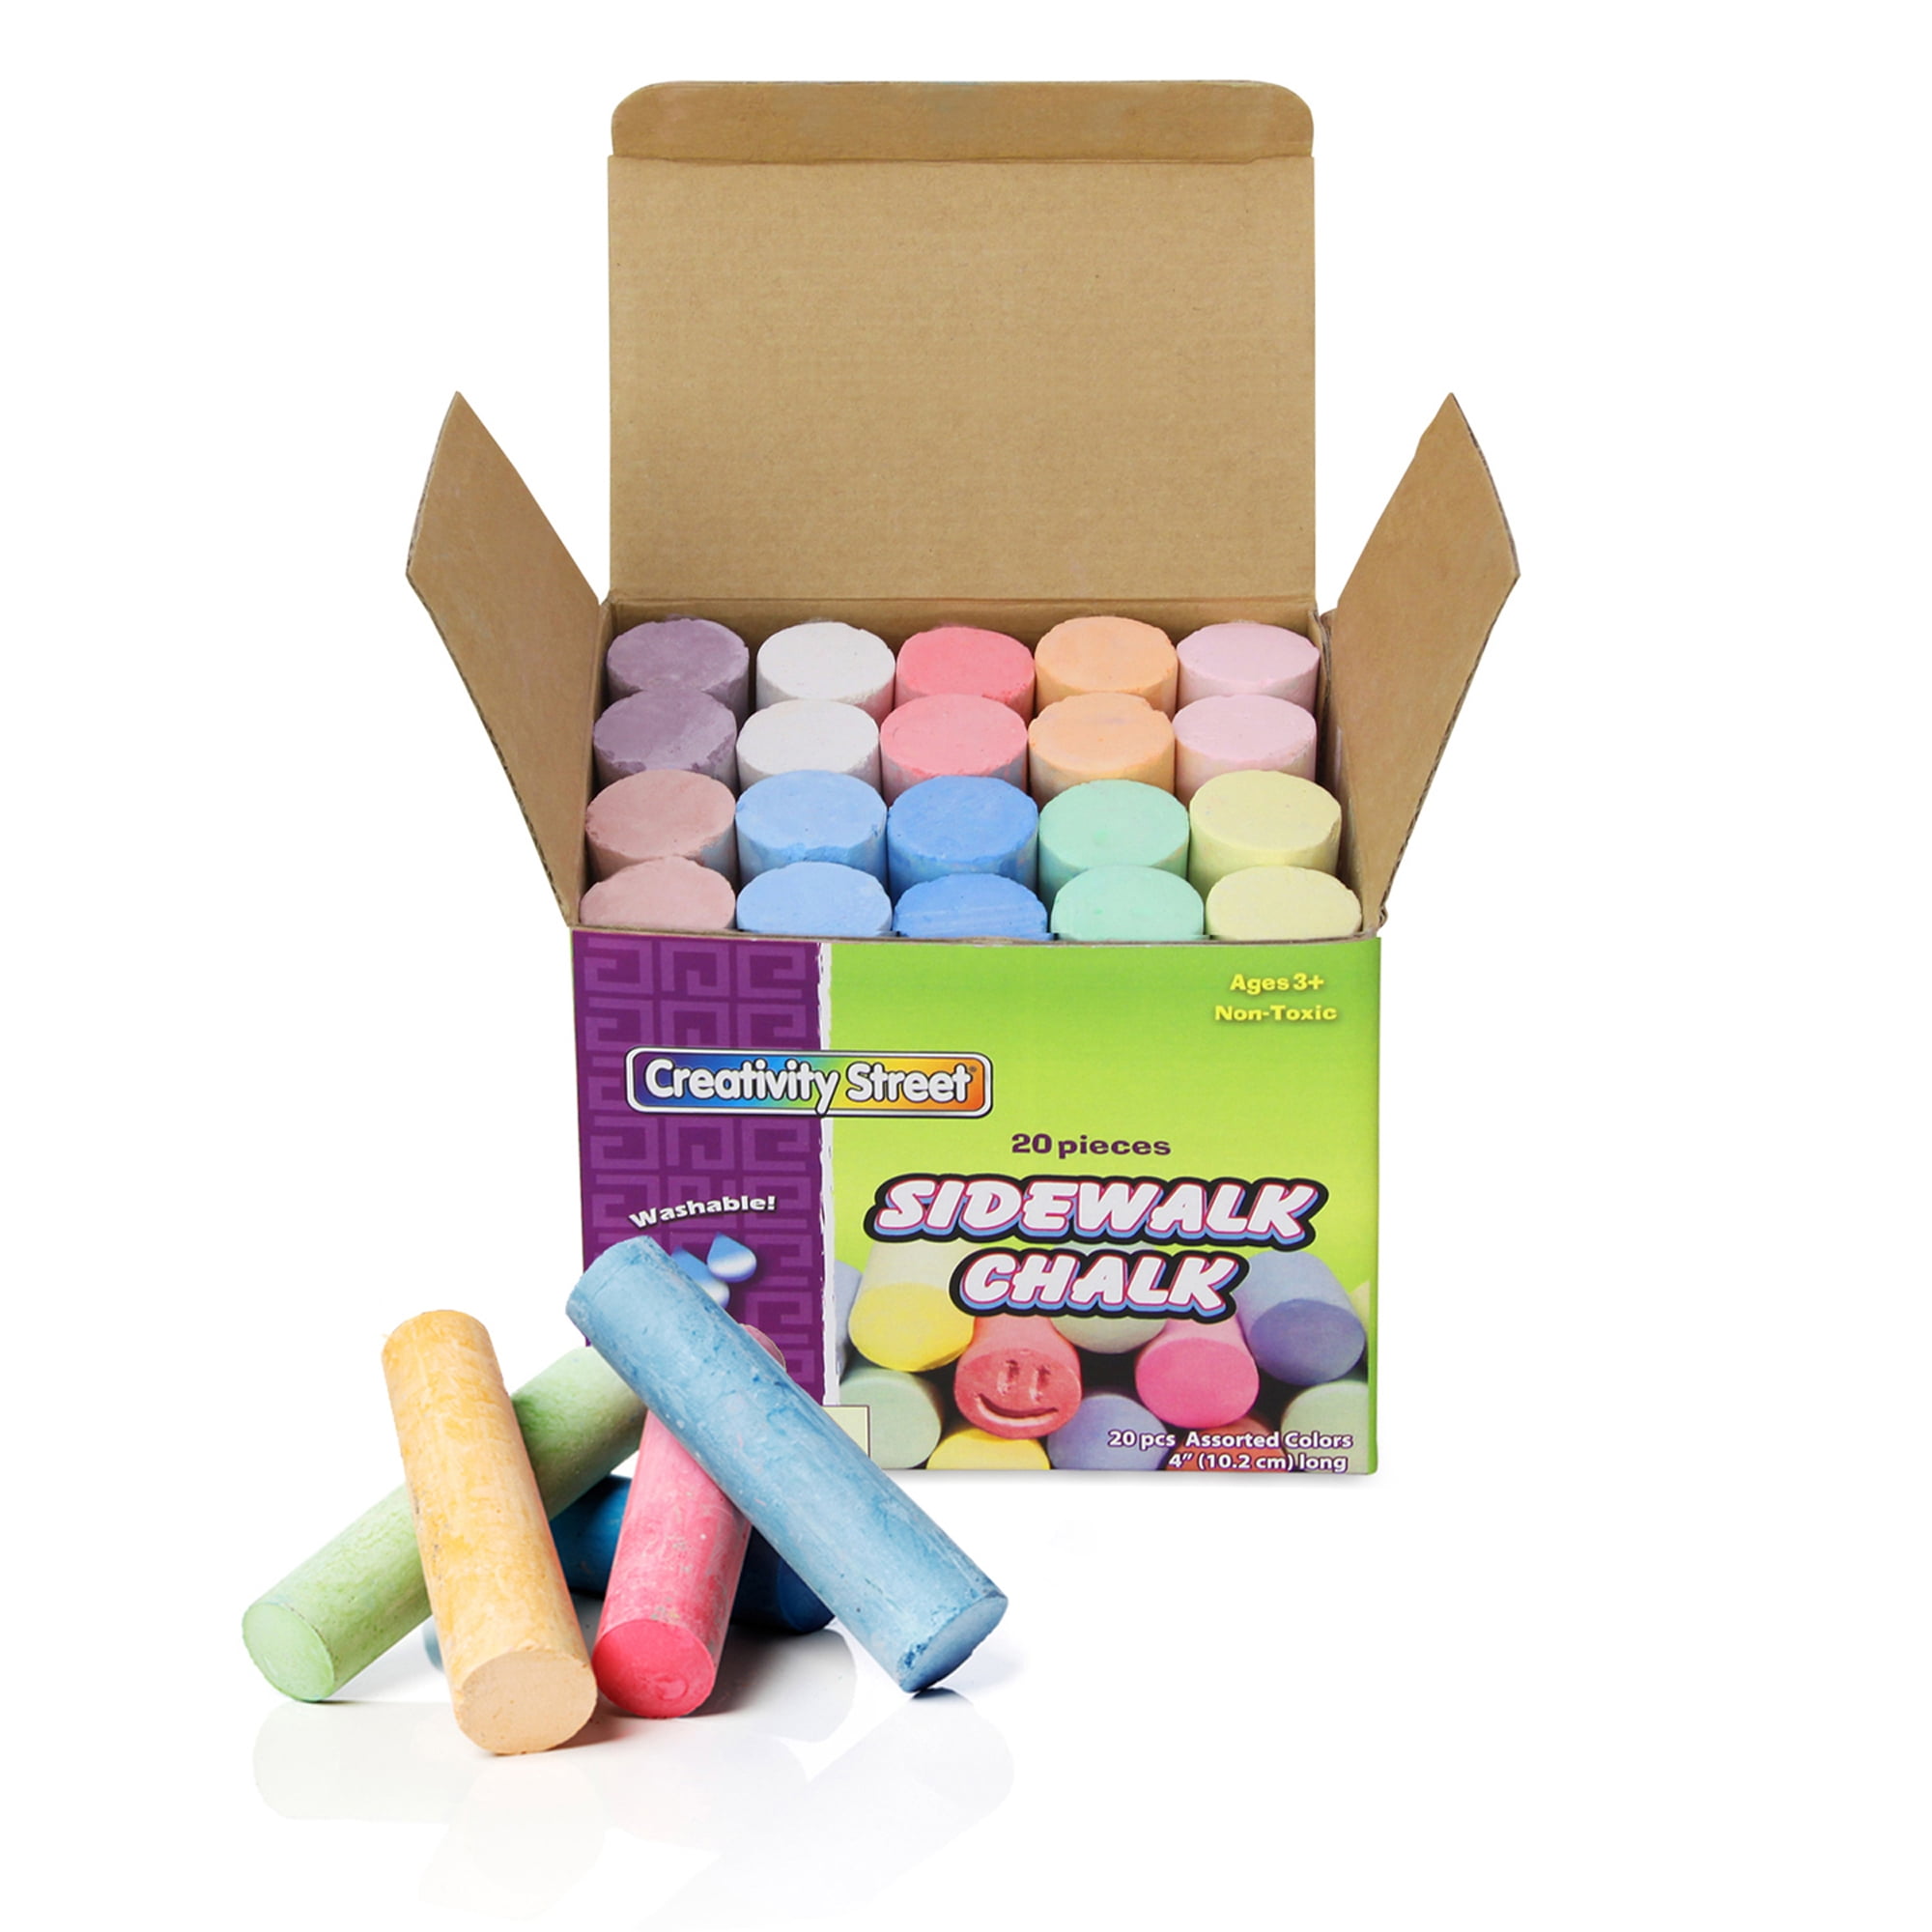 Sidewalk Chalk Box Set - 16 Assorted Colors - Roll Proof Design